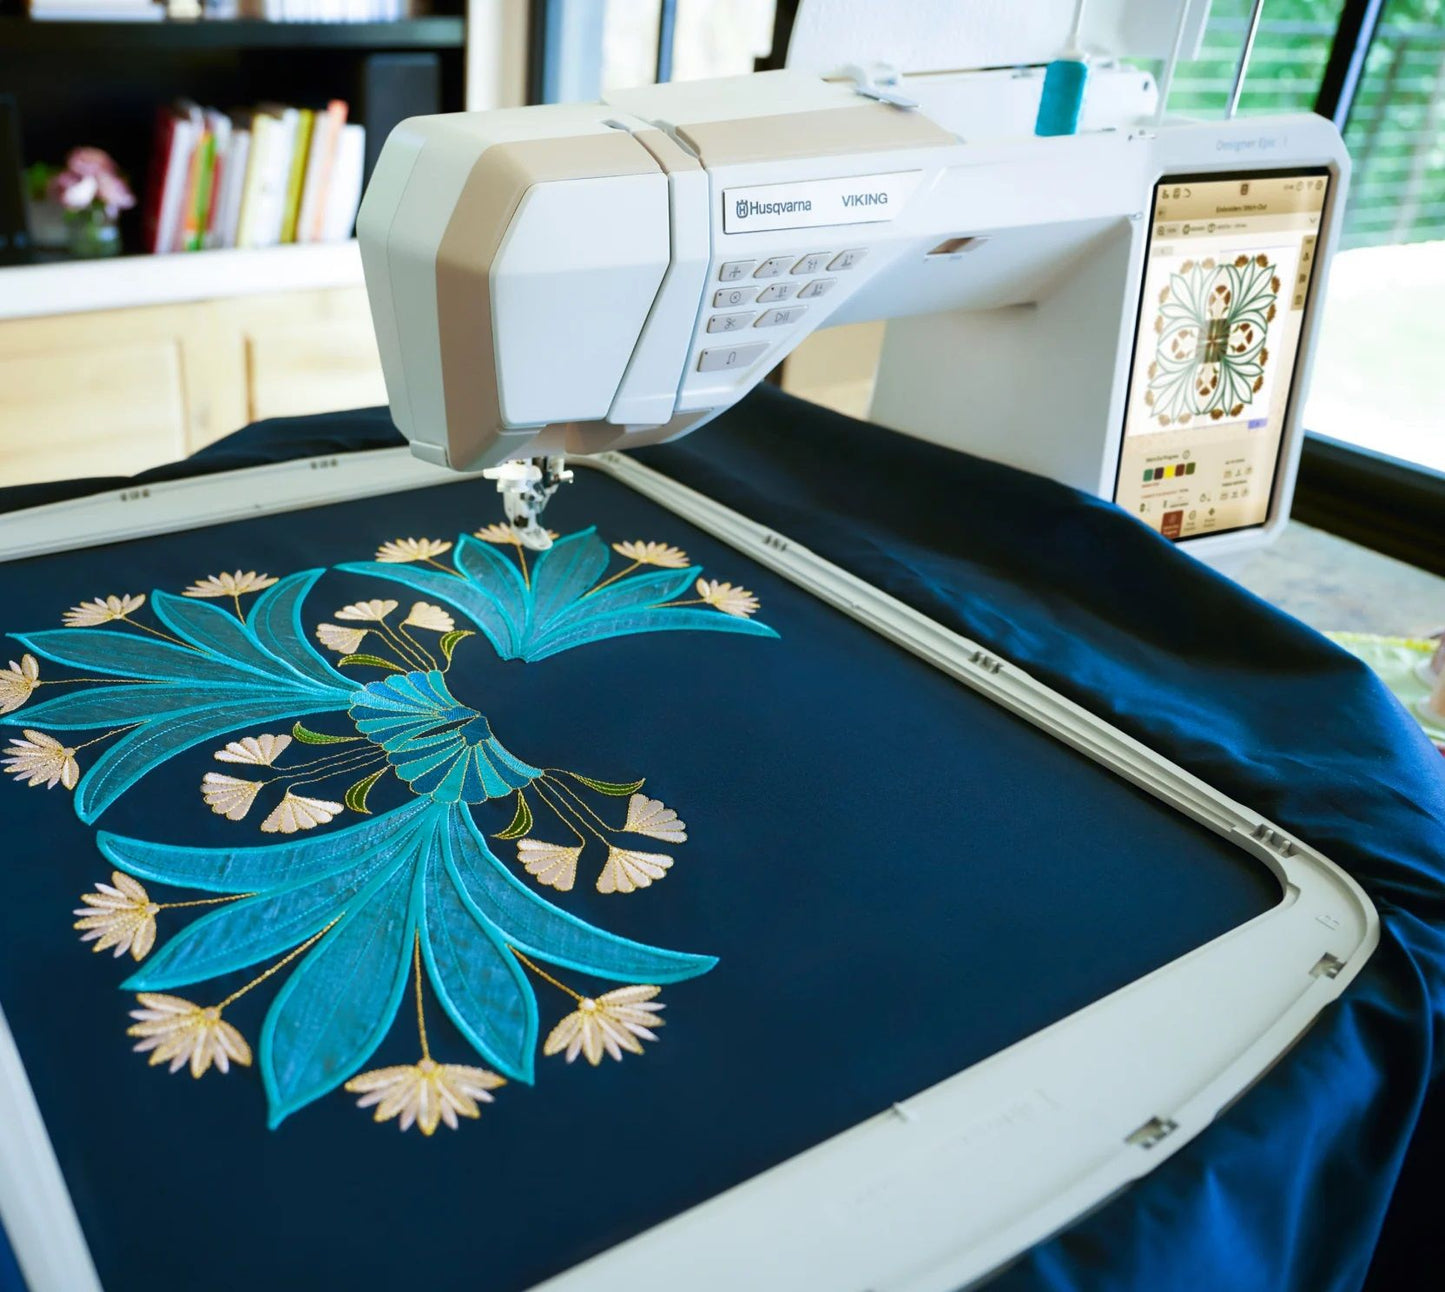 Husqvarna Epic 3 Sewing & Embroidery Machine